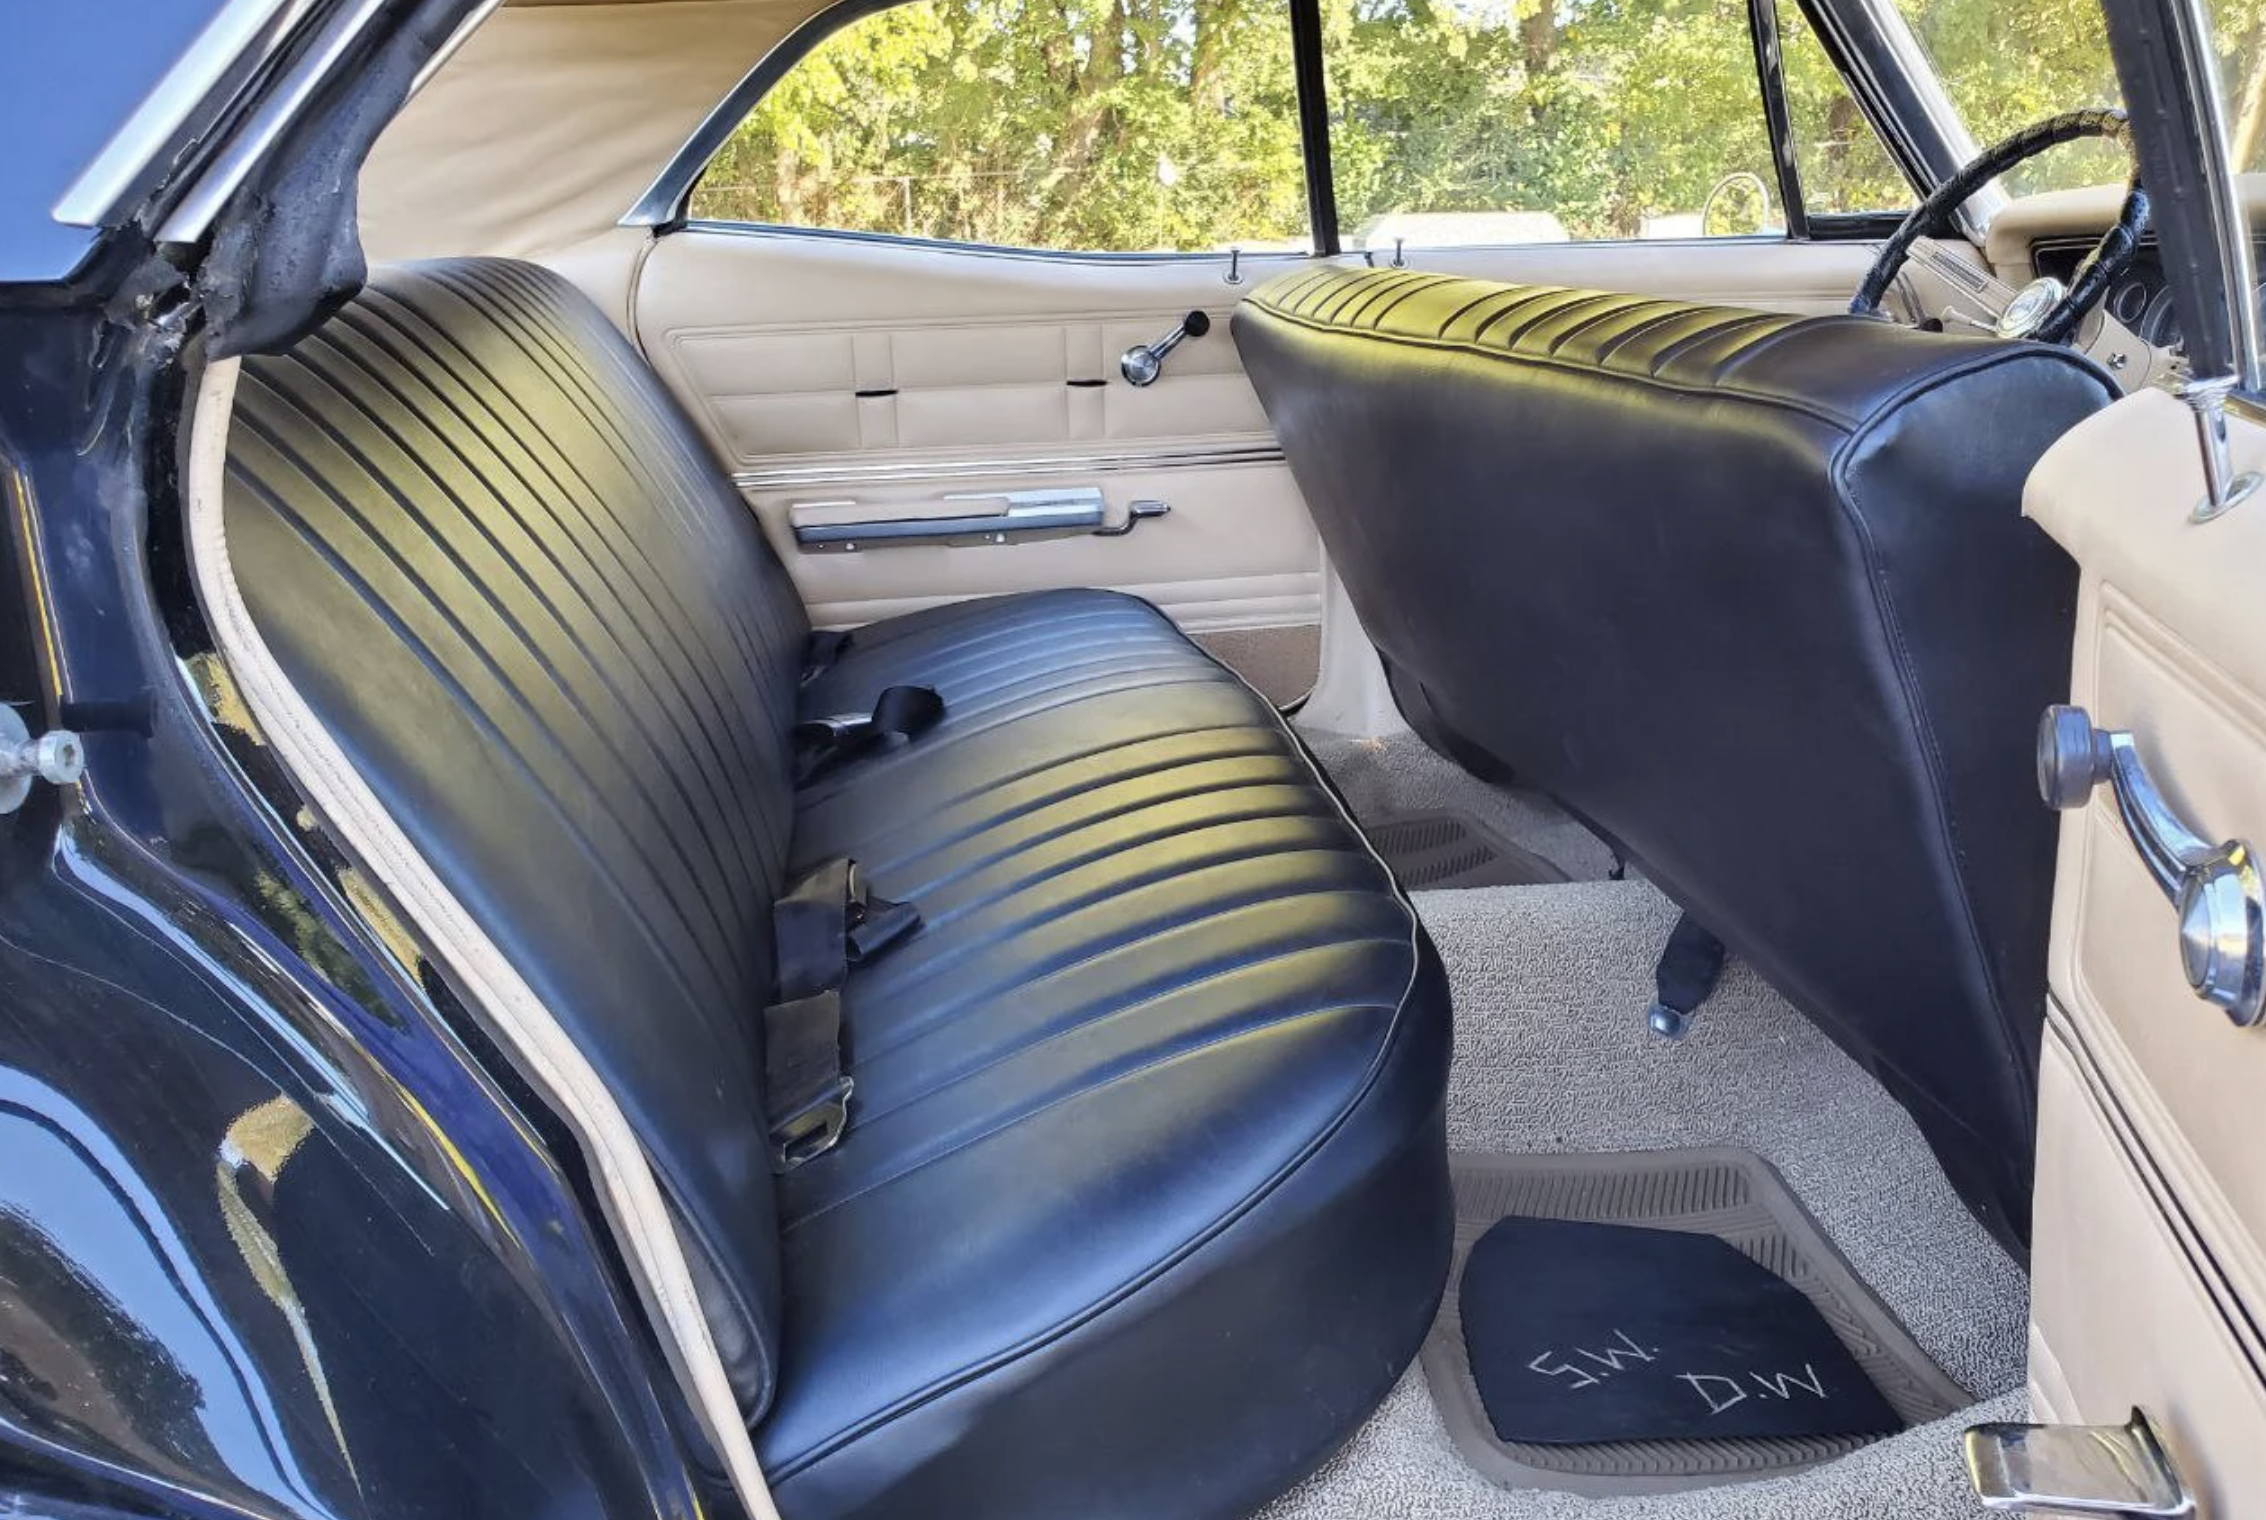  1967 Chevy Impala SS Sport Sedan Black & Dean